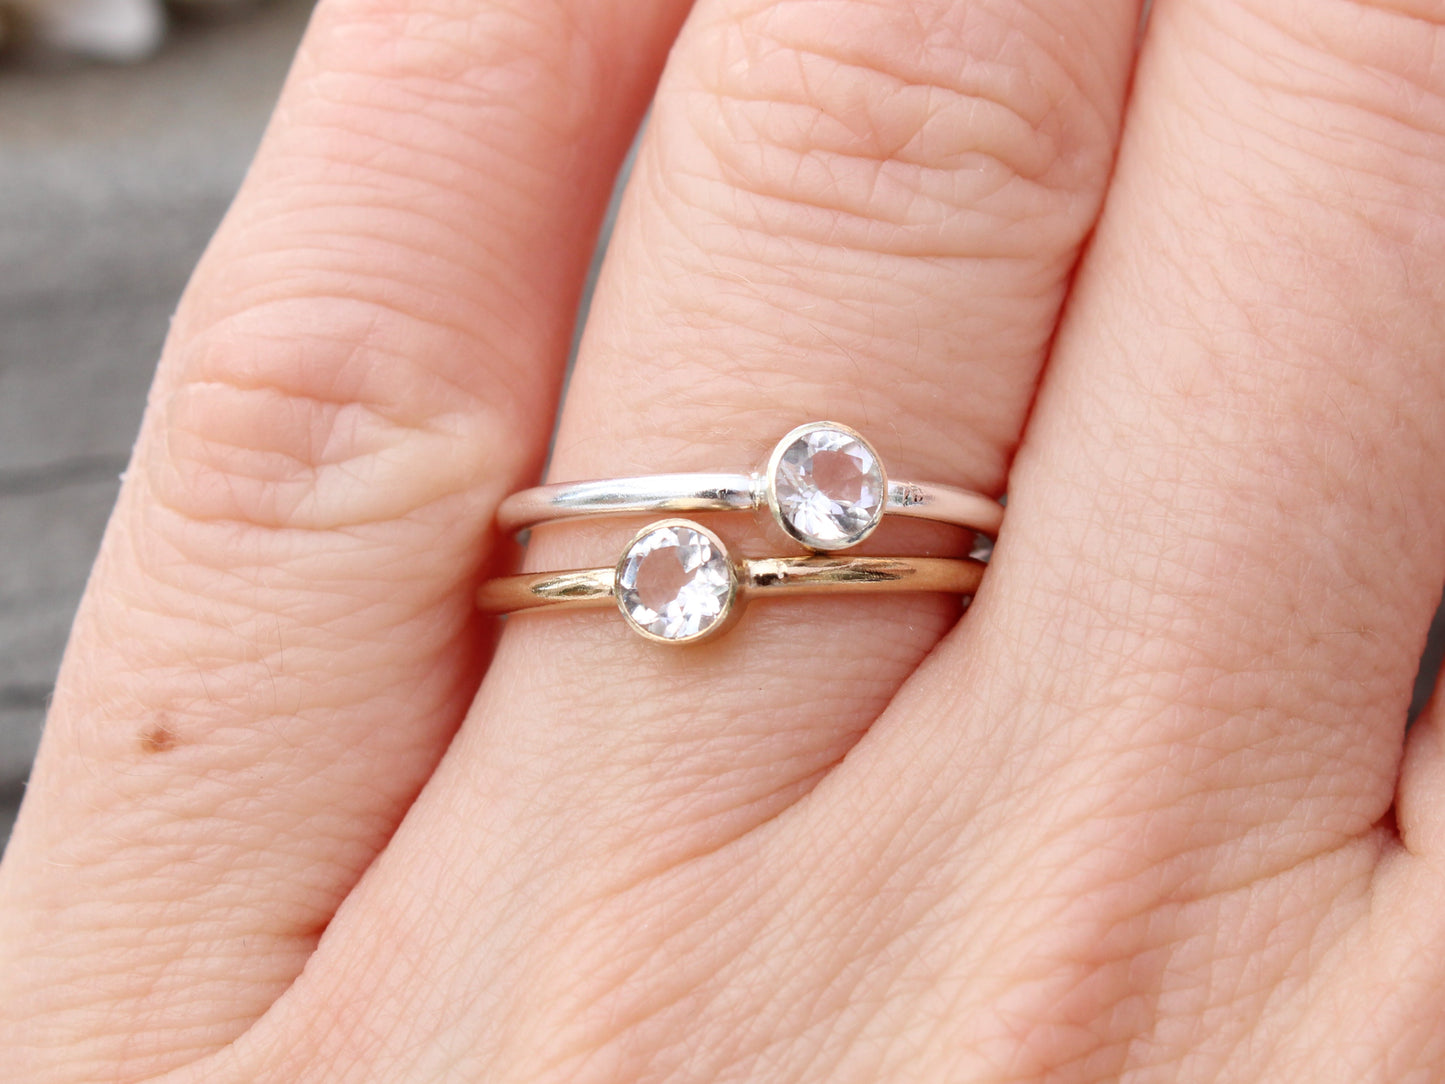 Quartz ring in silver or gold. April birthstone ring.